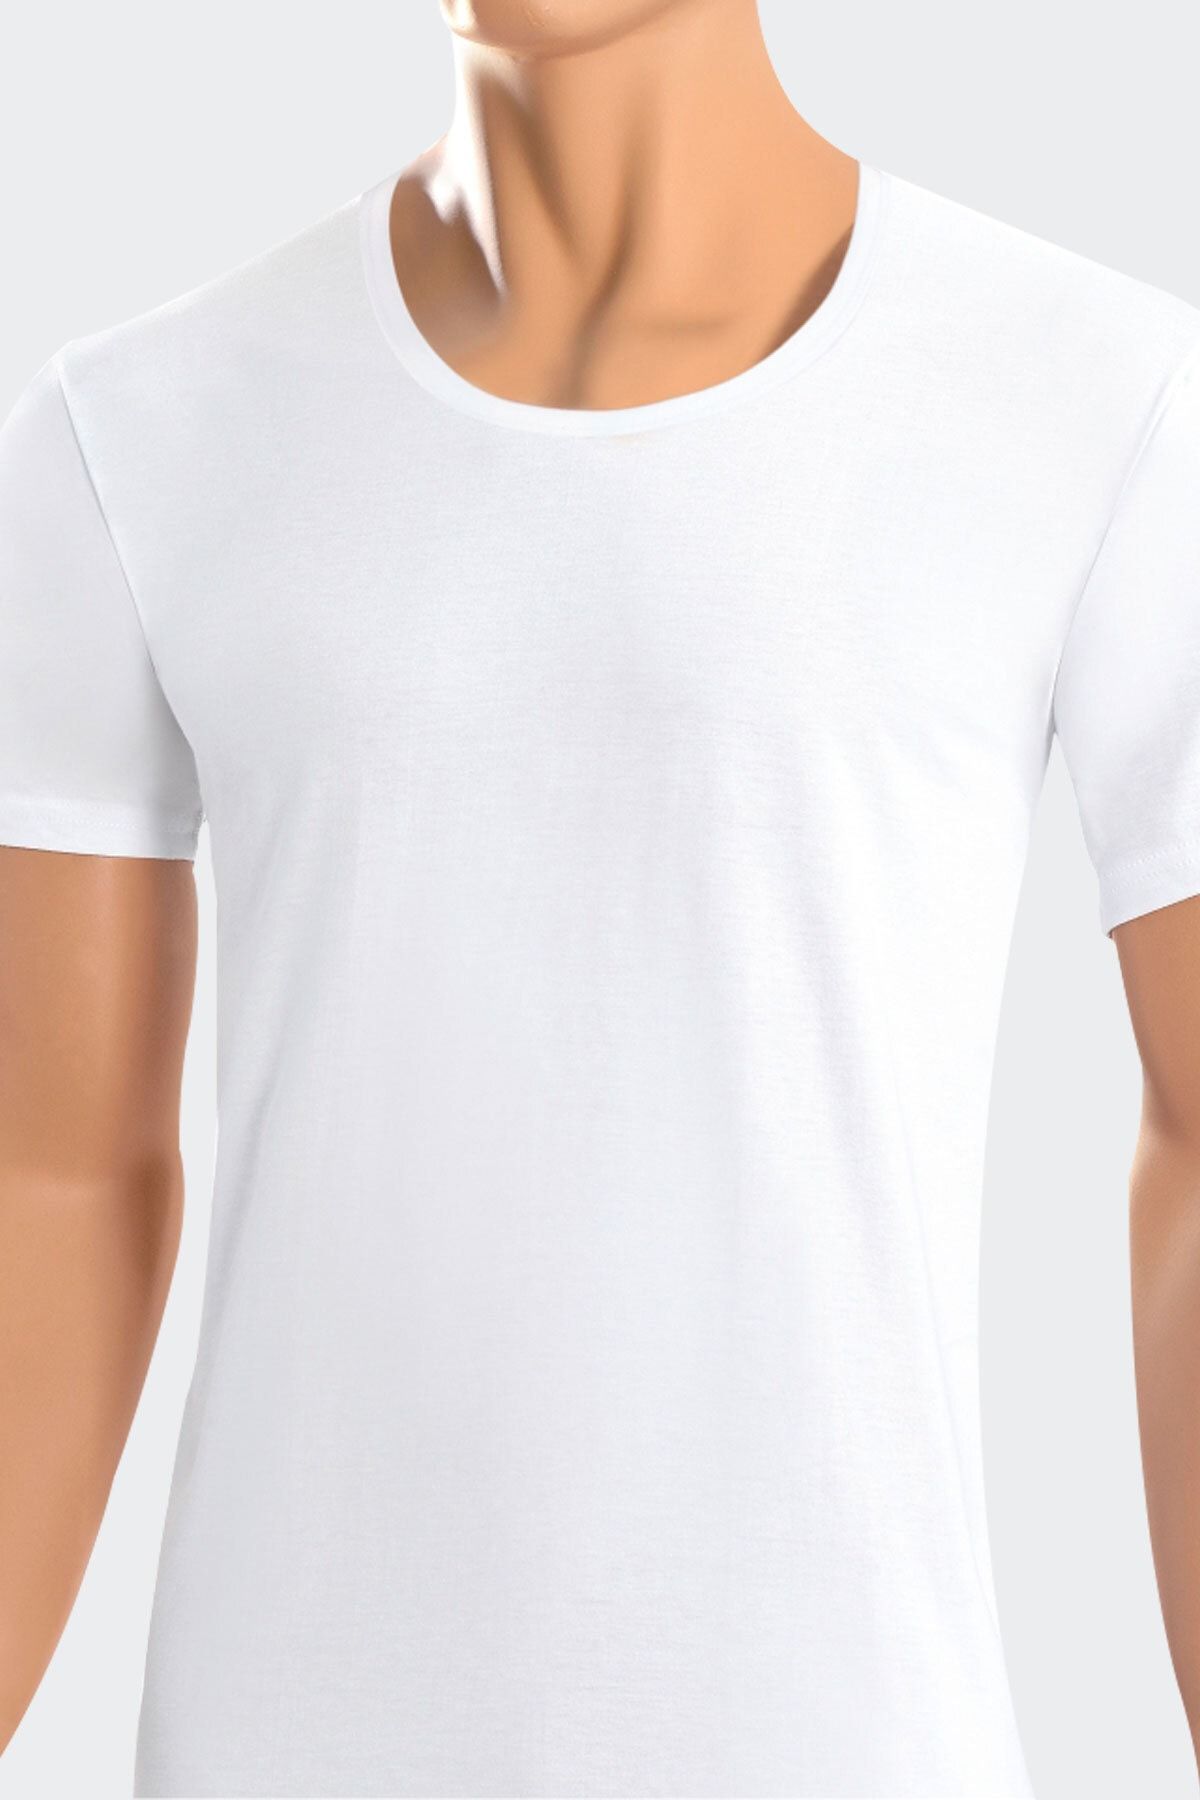 Öts Erkek Beyaz Süprem Açık Yaka T-shirt Pamuk 2'li